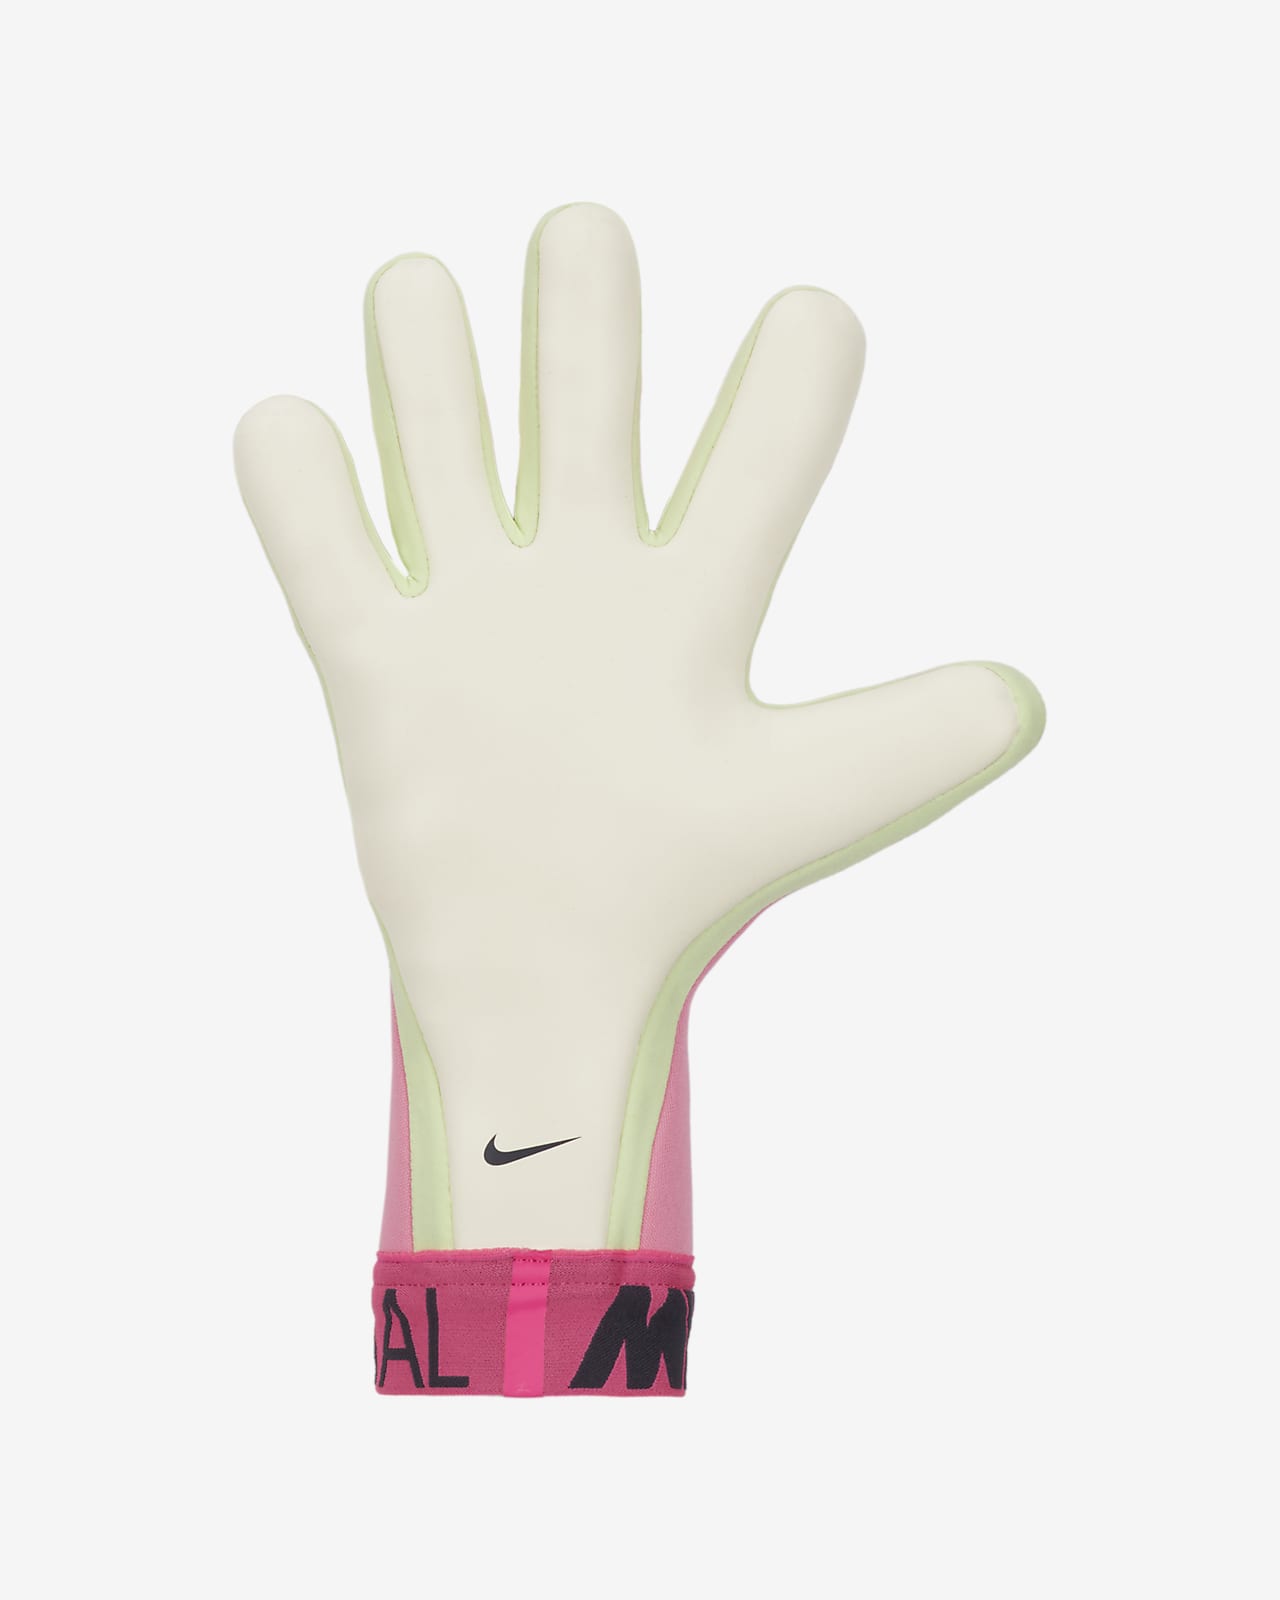 Postbode Uitgestorven Uitwerpselen Nike Mercurial Goalkeeper Touch Victory Soccer Gloves. Nike.com